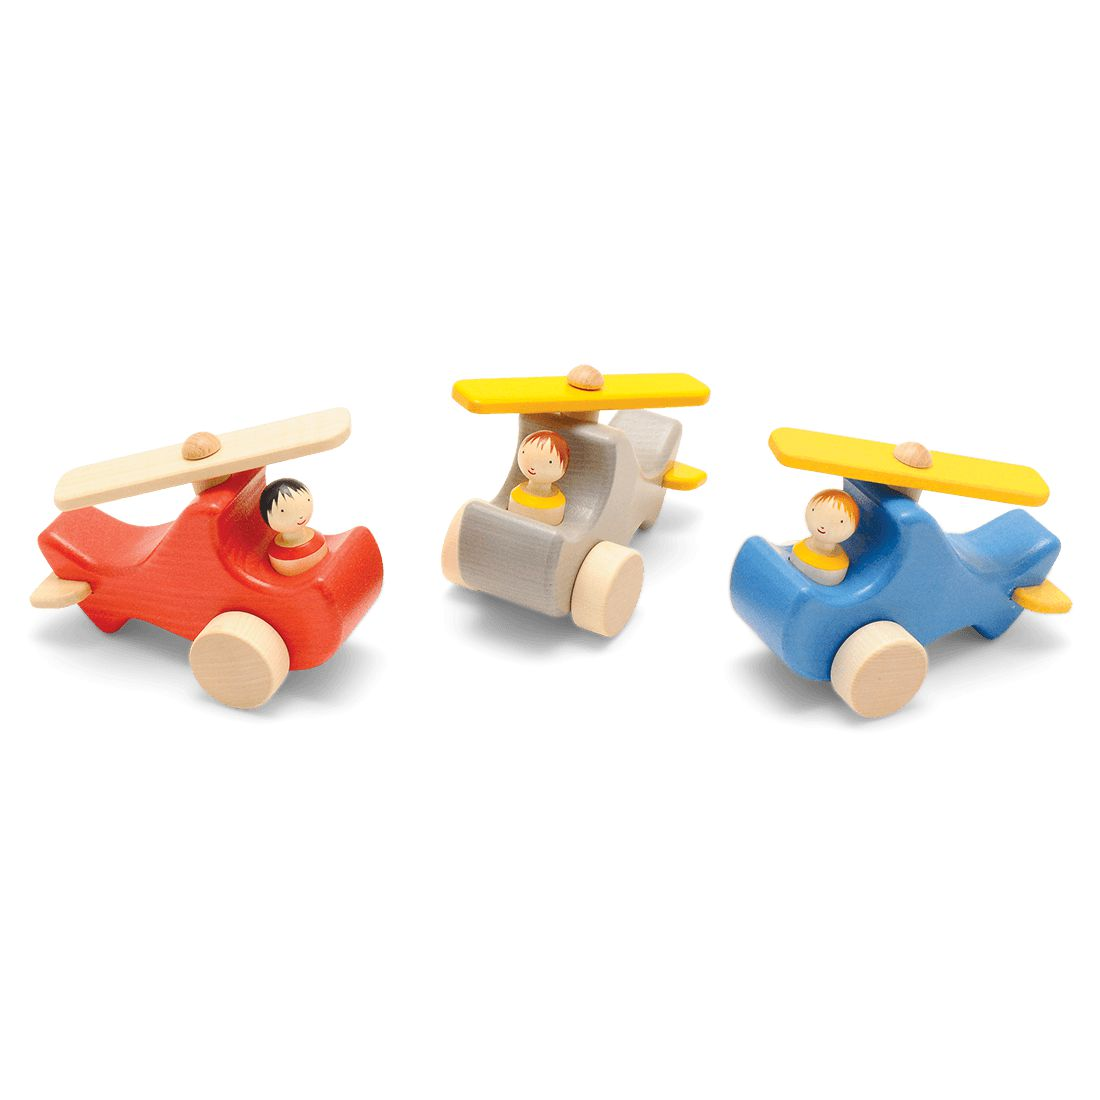 Fahrzeuge aus Holz - Seilbahn - Holzspielzeuge - Spielzeuge aus Holz